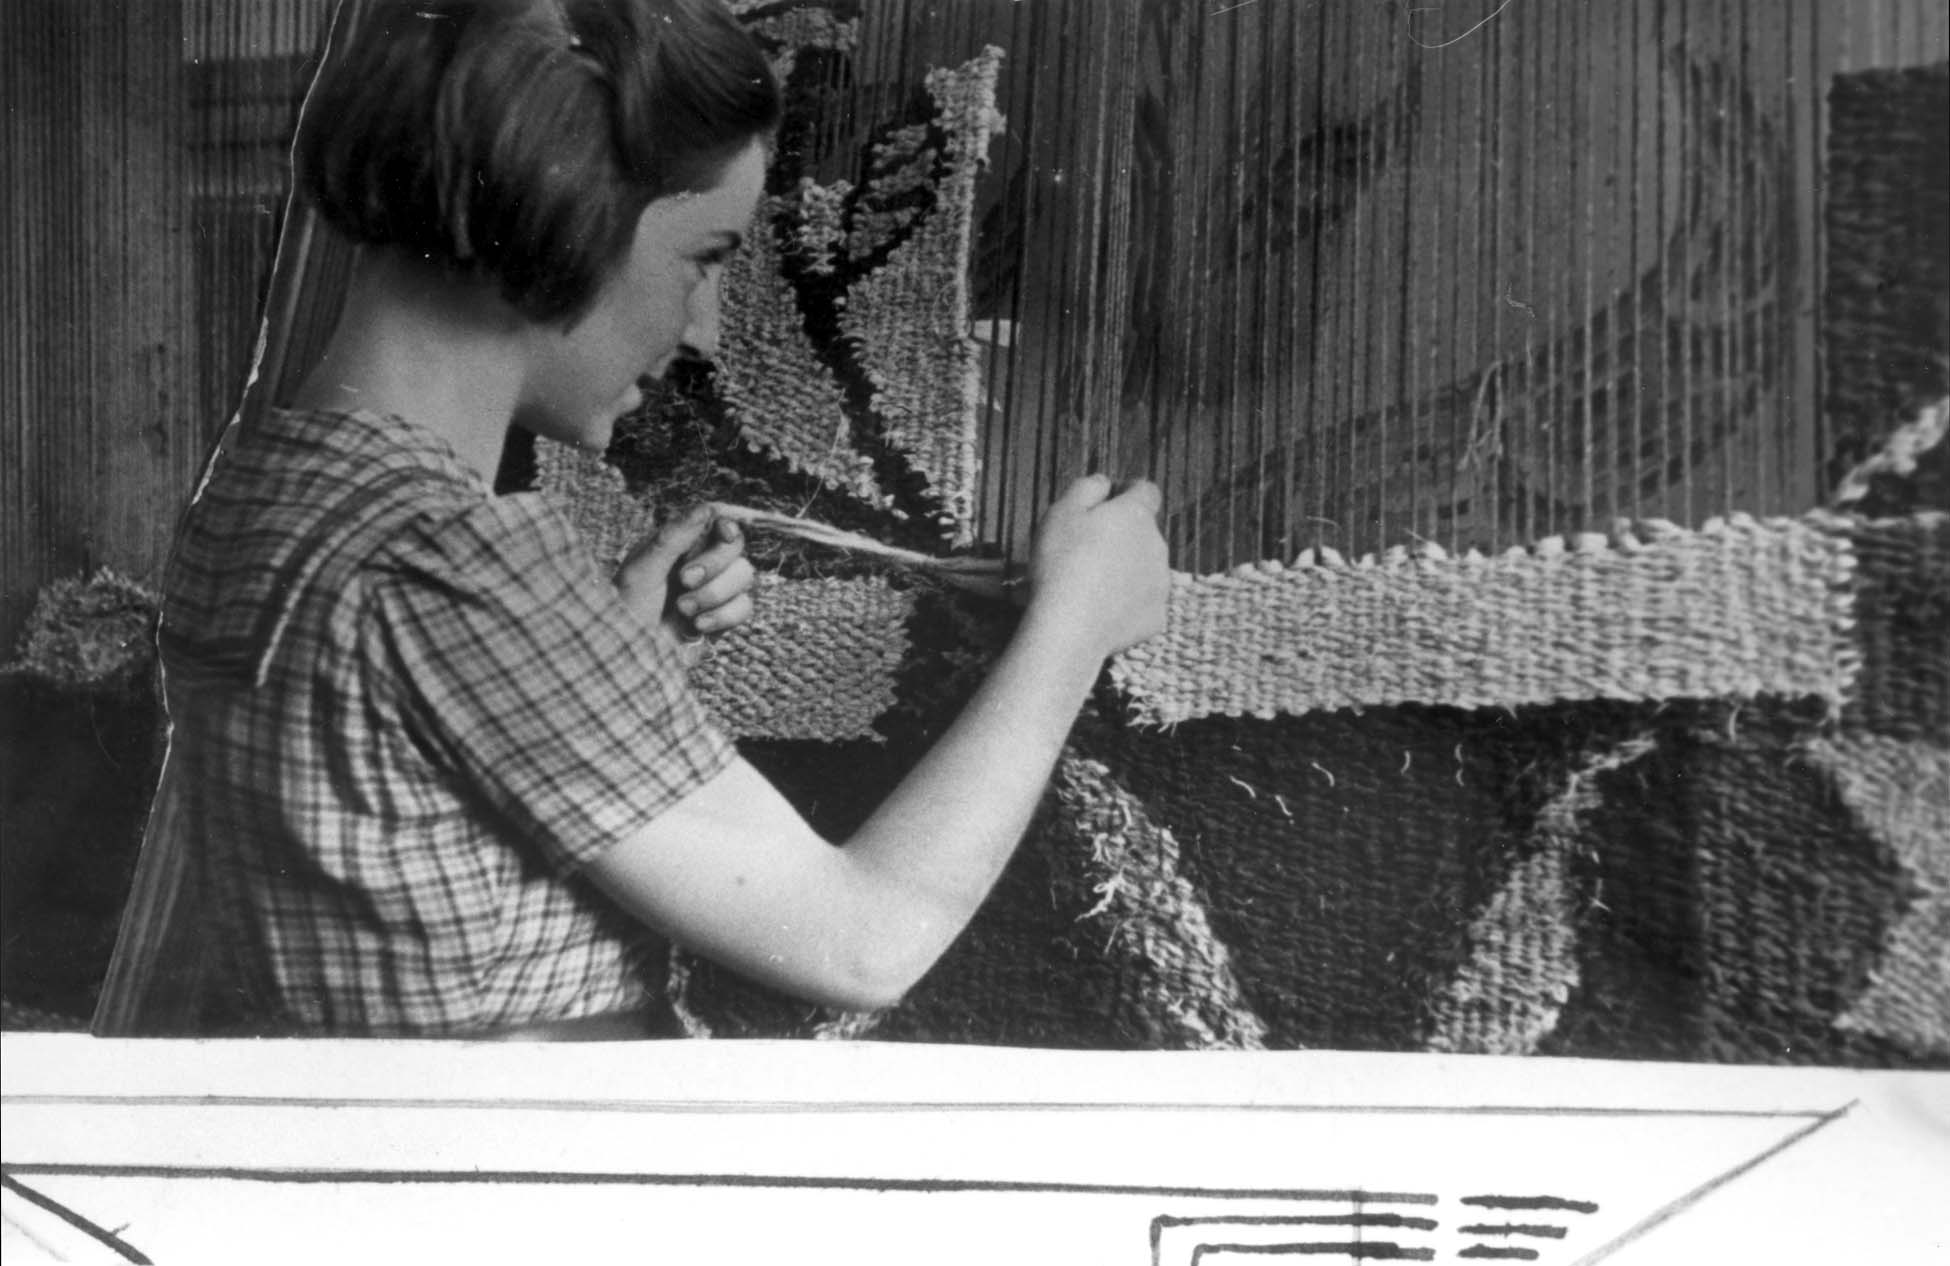 Girl weaving in a Lodz ghetto factory